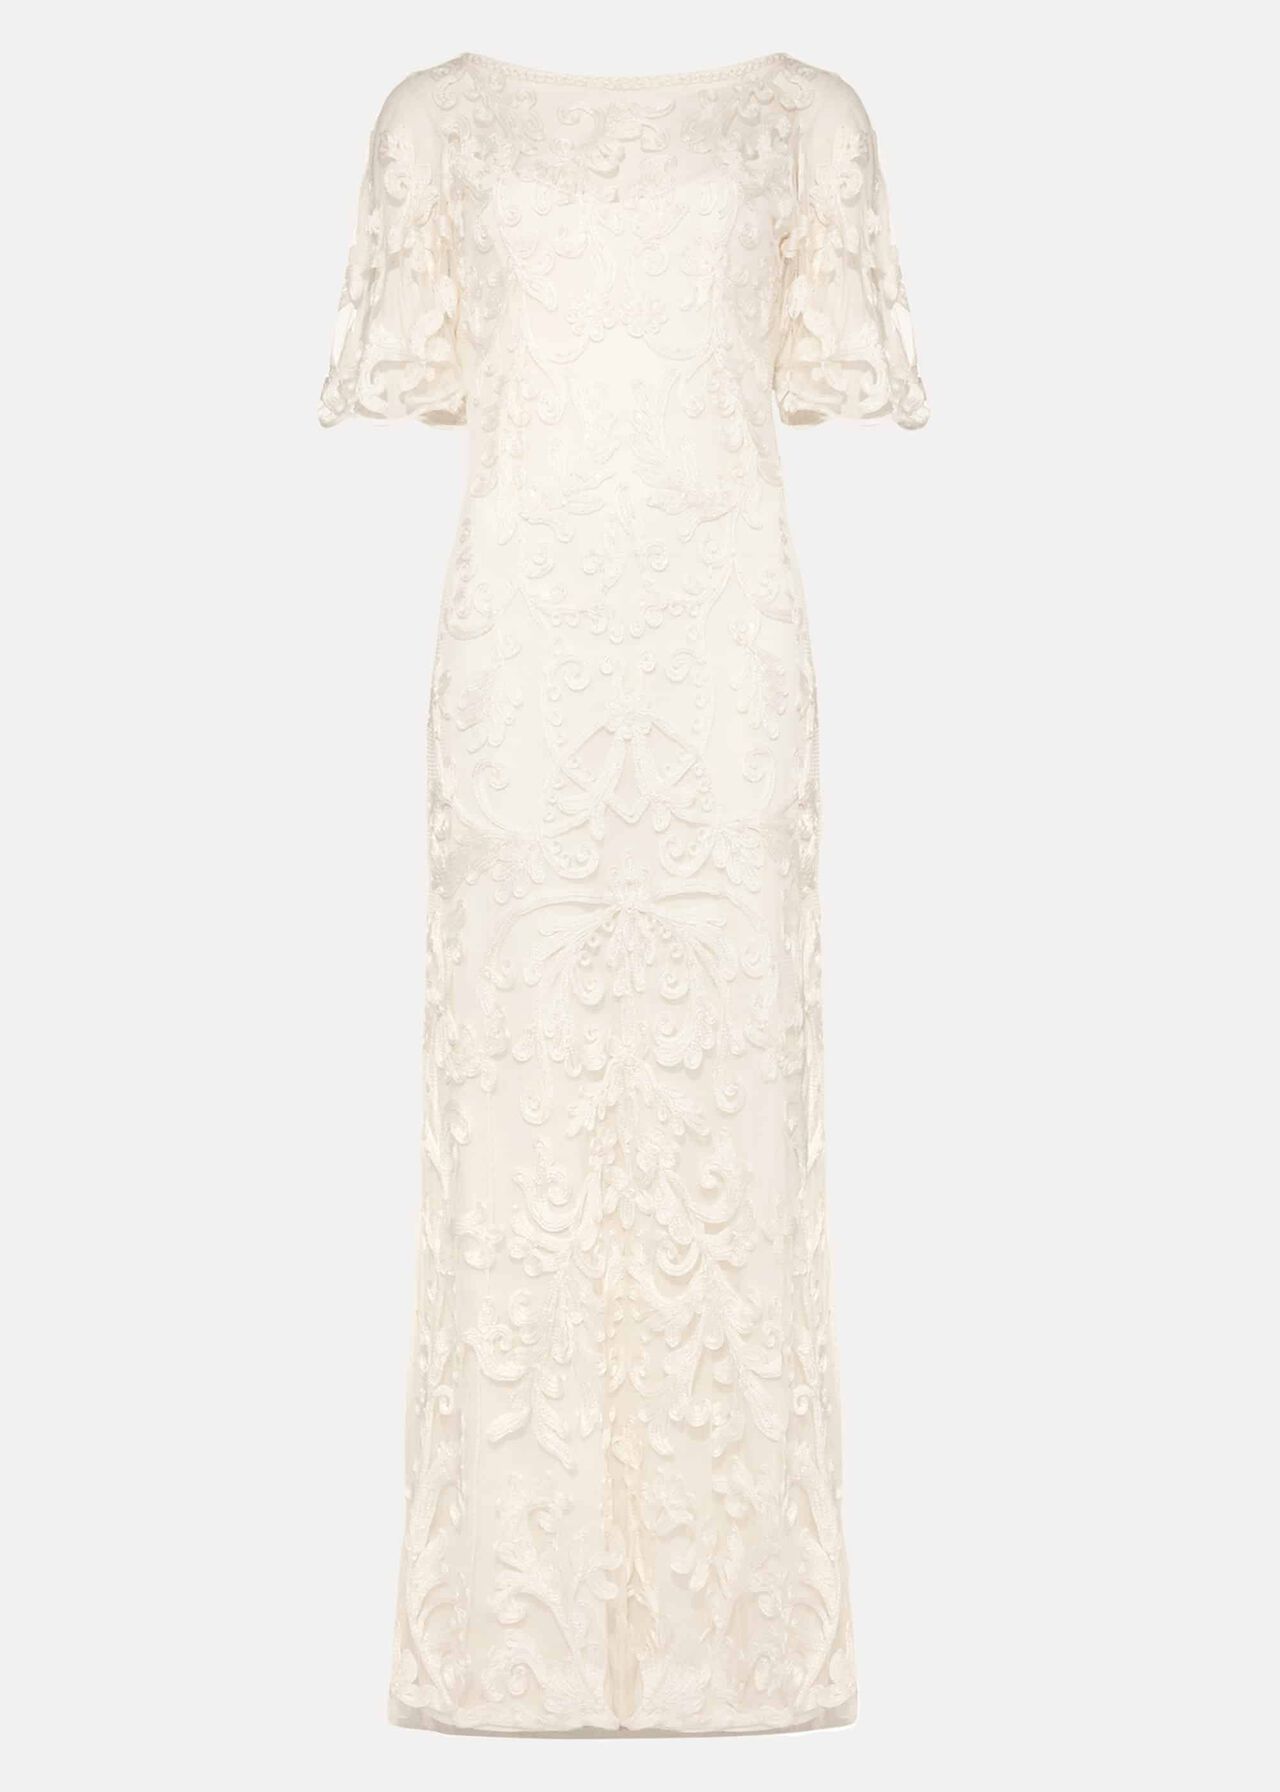 Avianna Tapework Lace Wedding Dress